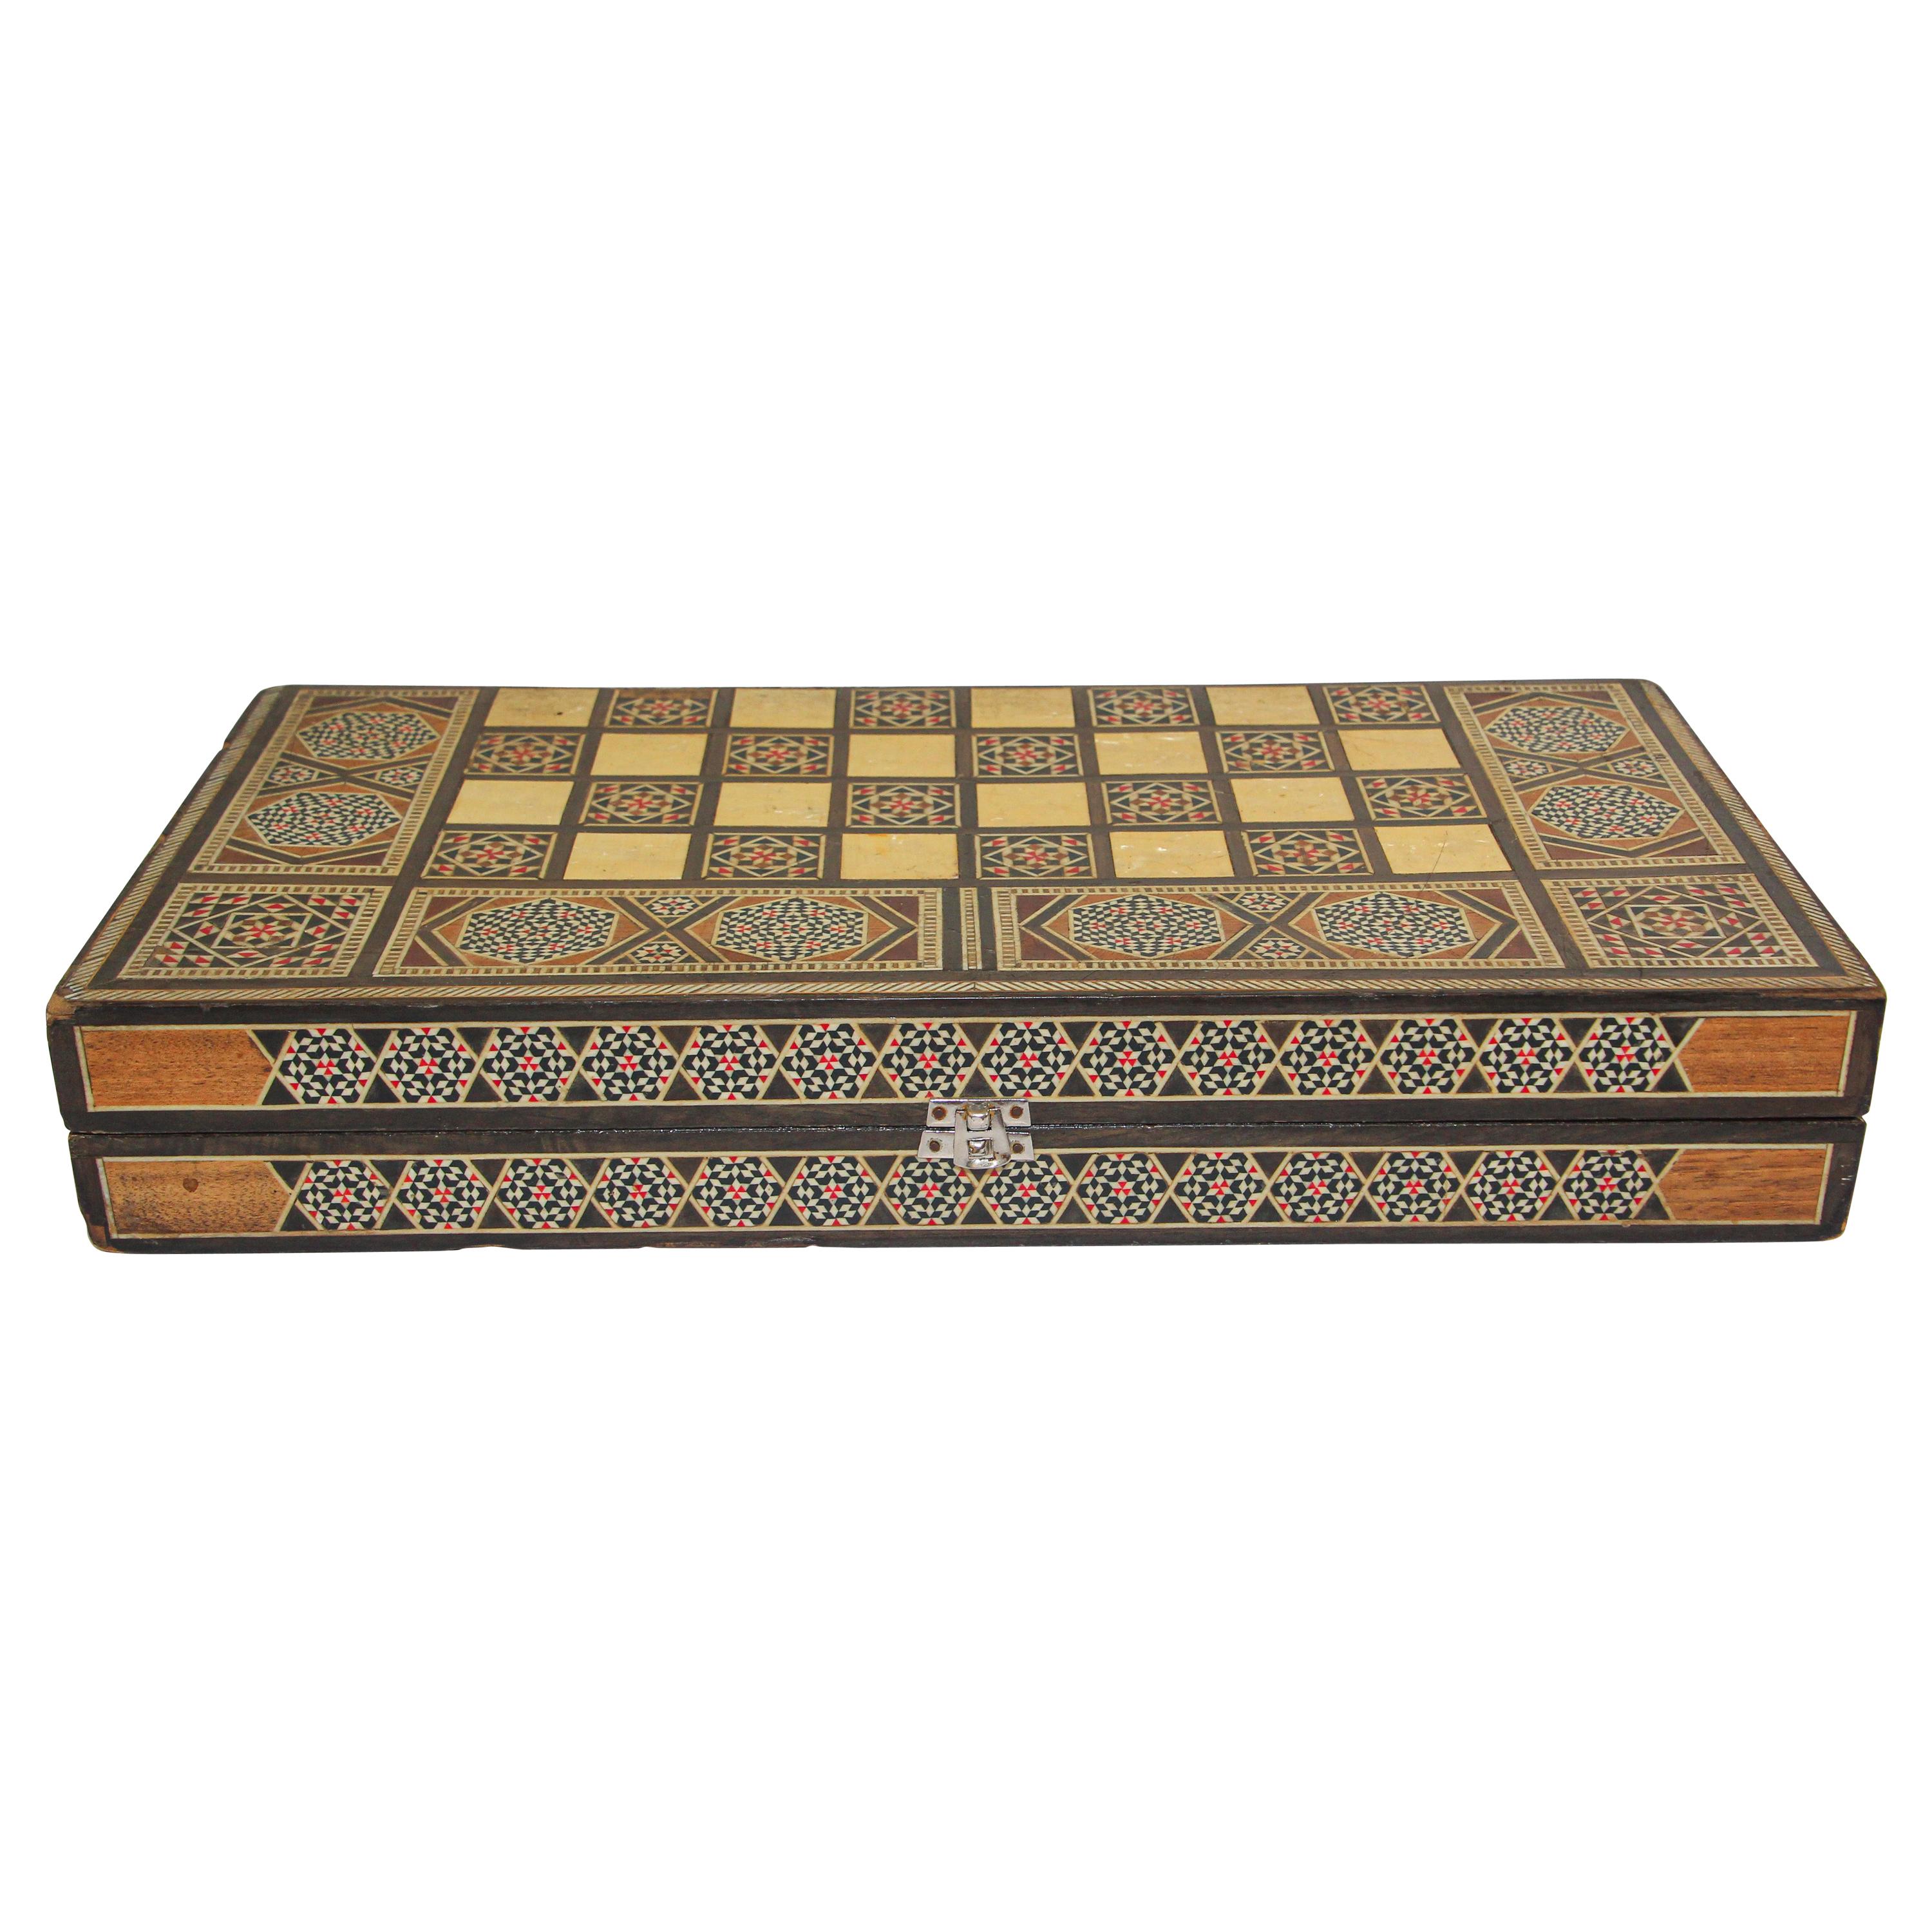 Vintage Midcentury Folding Mosaic Inlaid Box with Backgammon Game